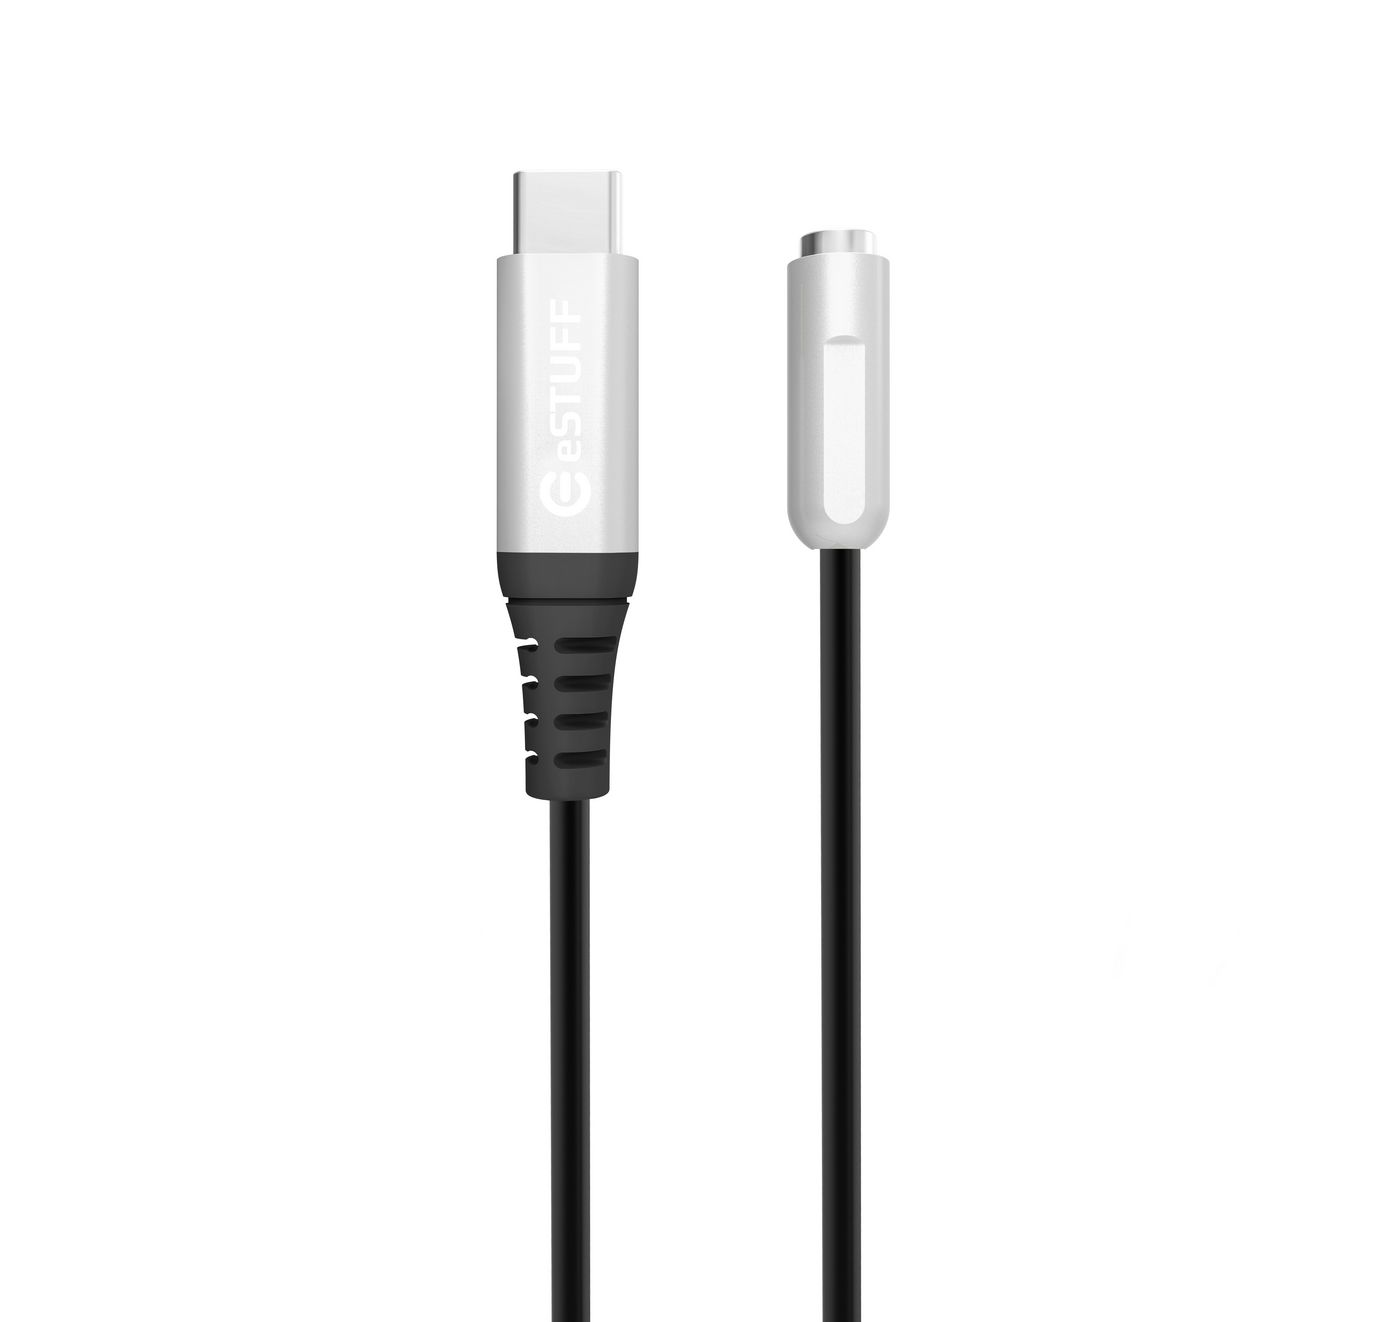 USB-c Minijack Adapter 30cm Cable. Metal Plugs With